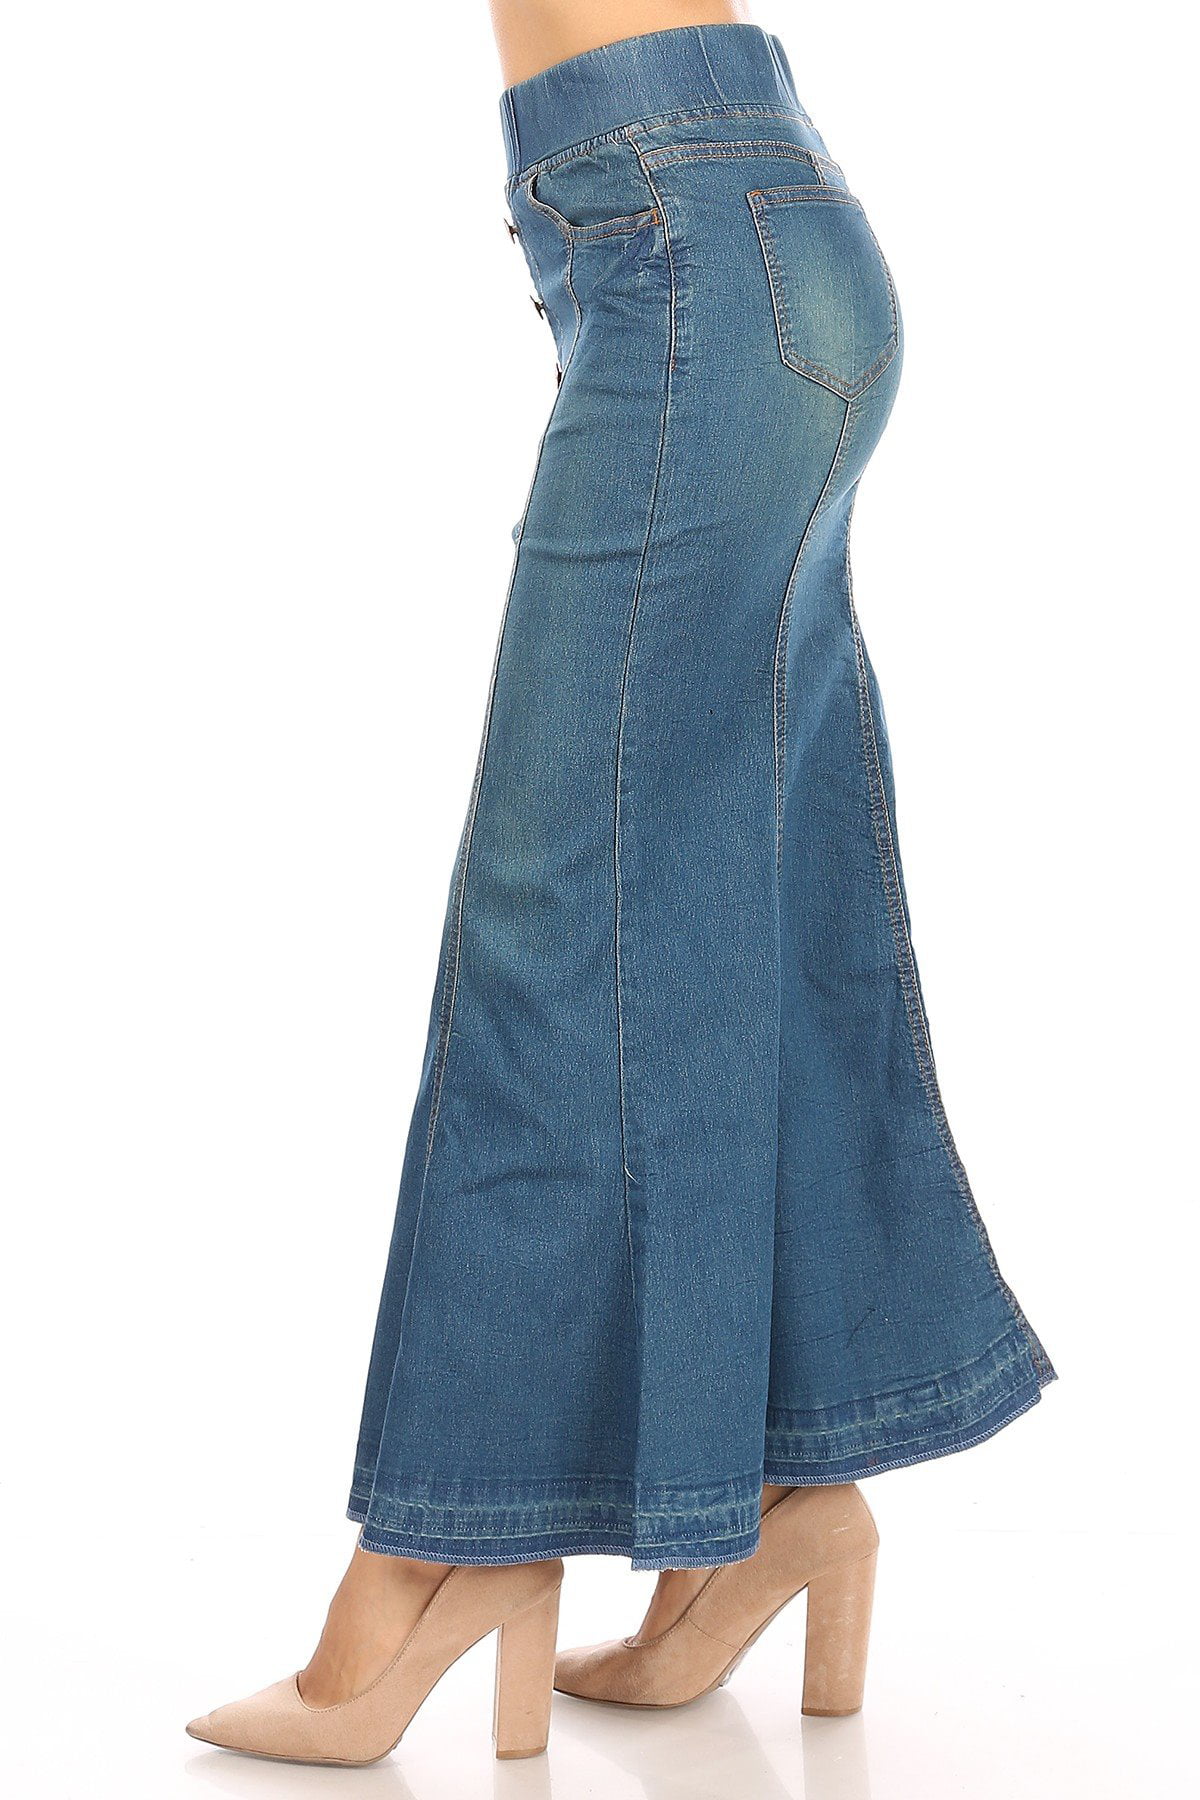 Fashion2Love Women/'s Juniors//Plus Size Elastic Waist Mermaid Shape Stretch Denim Long Skirt